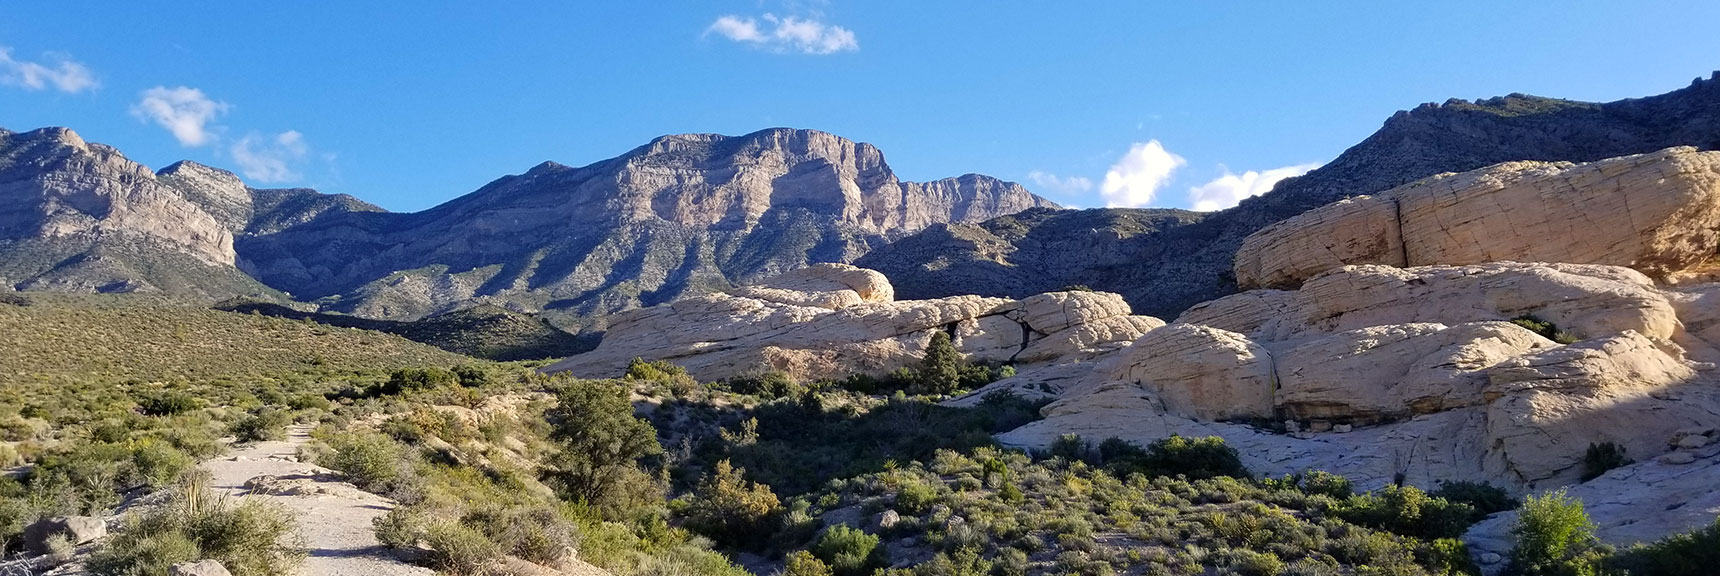 Trail Toward Turtlehead Peak in Red Rock National Park, Nevada